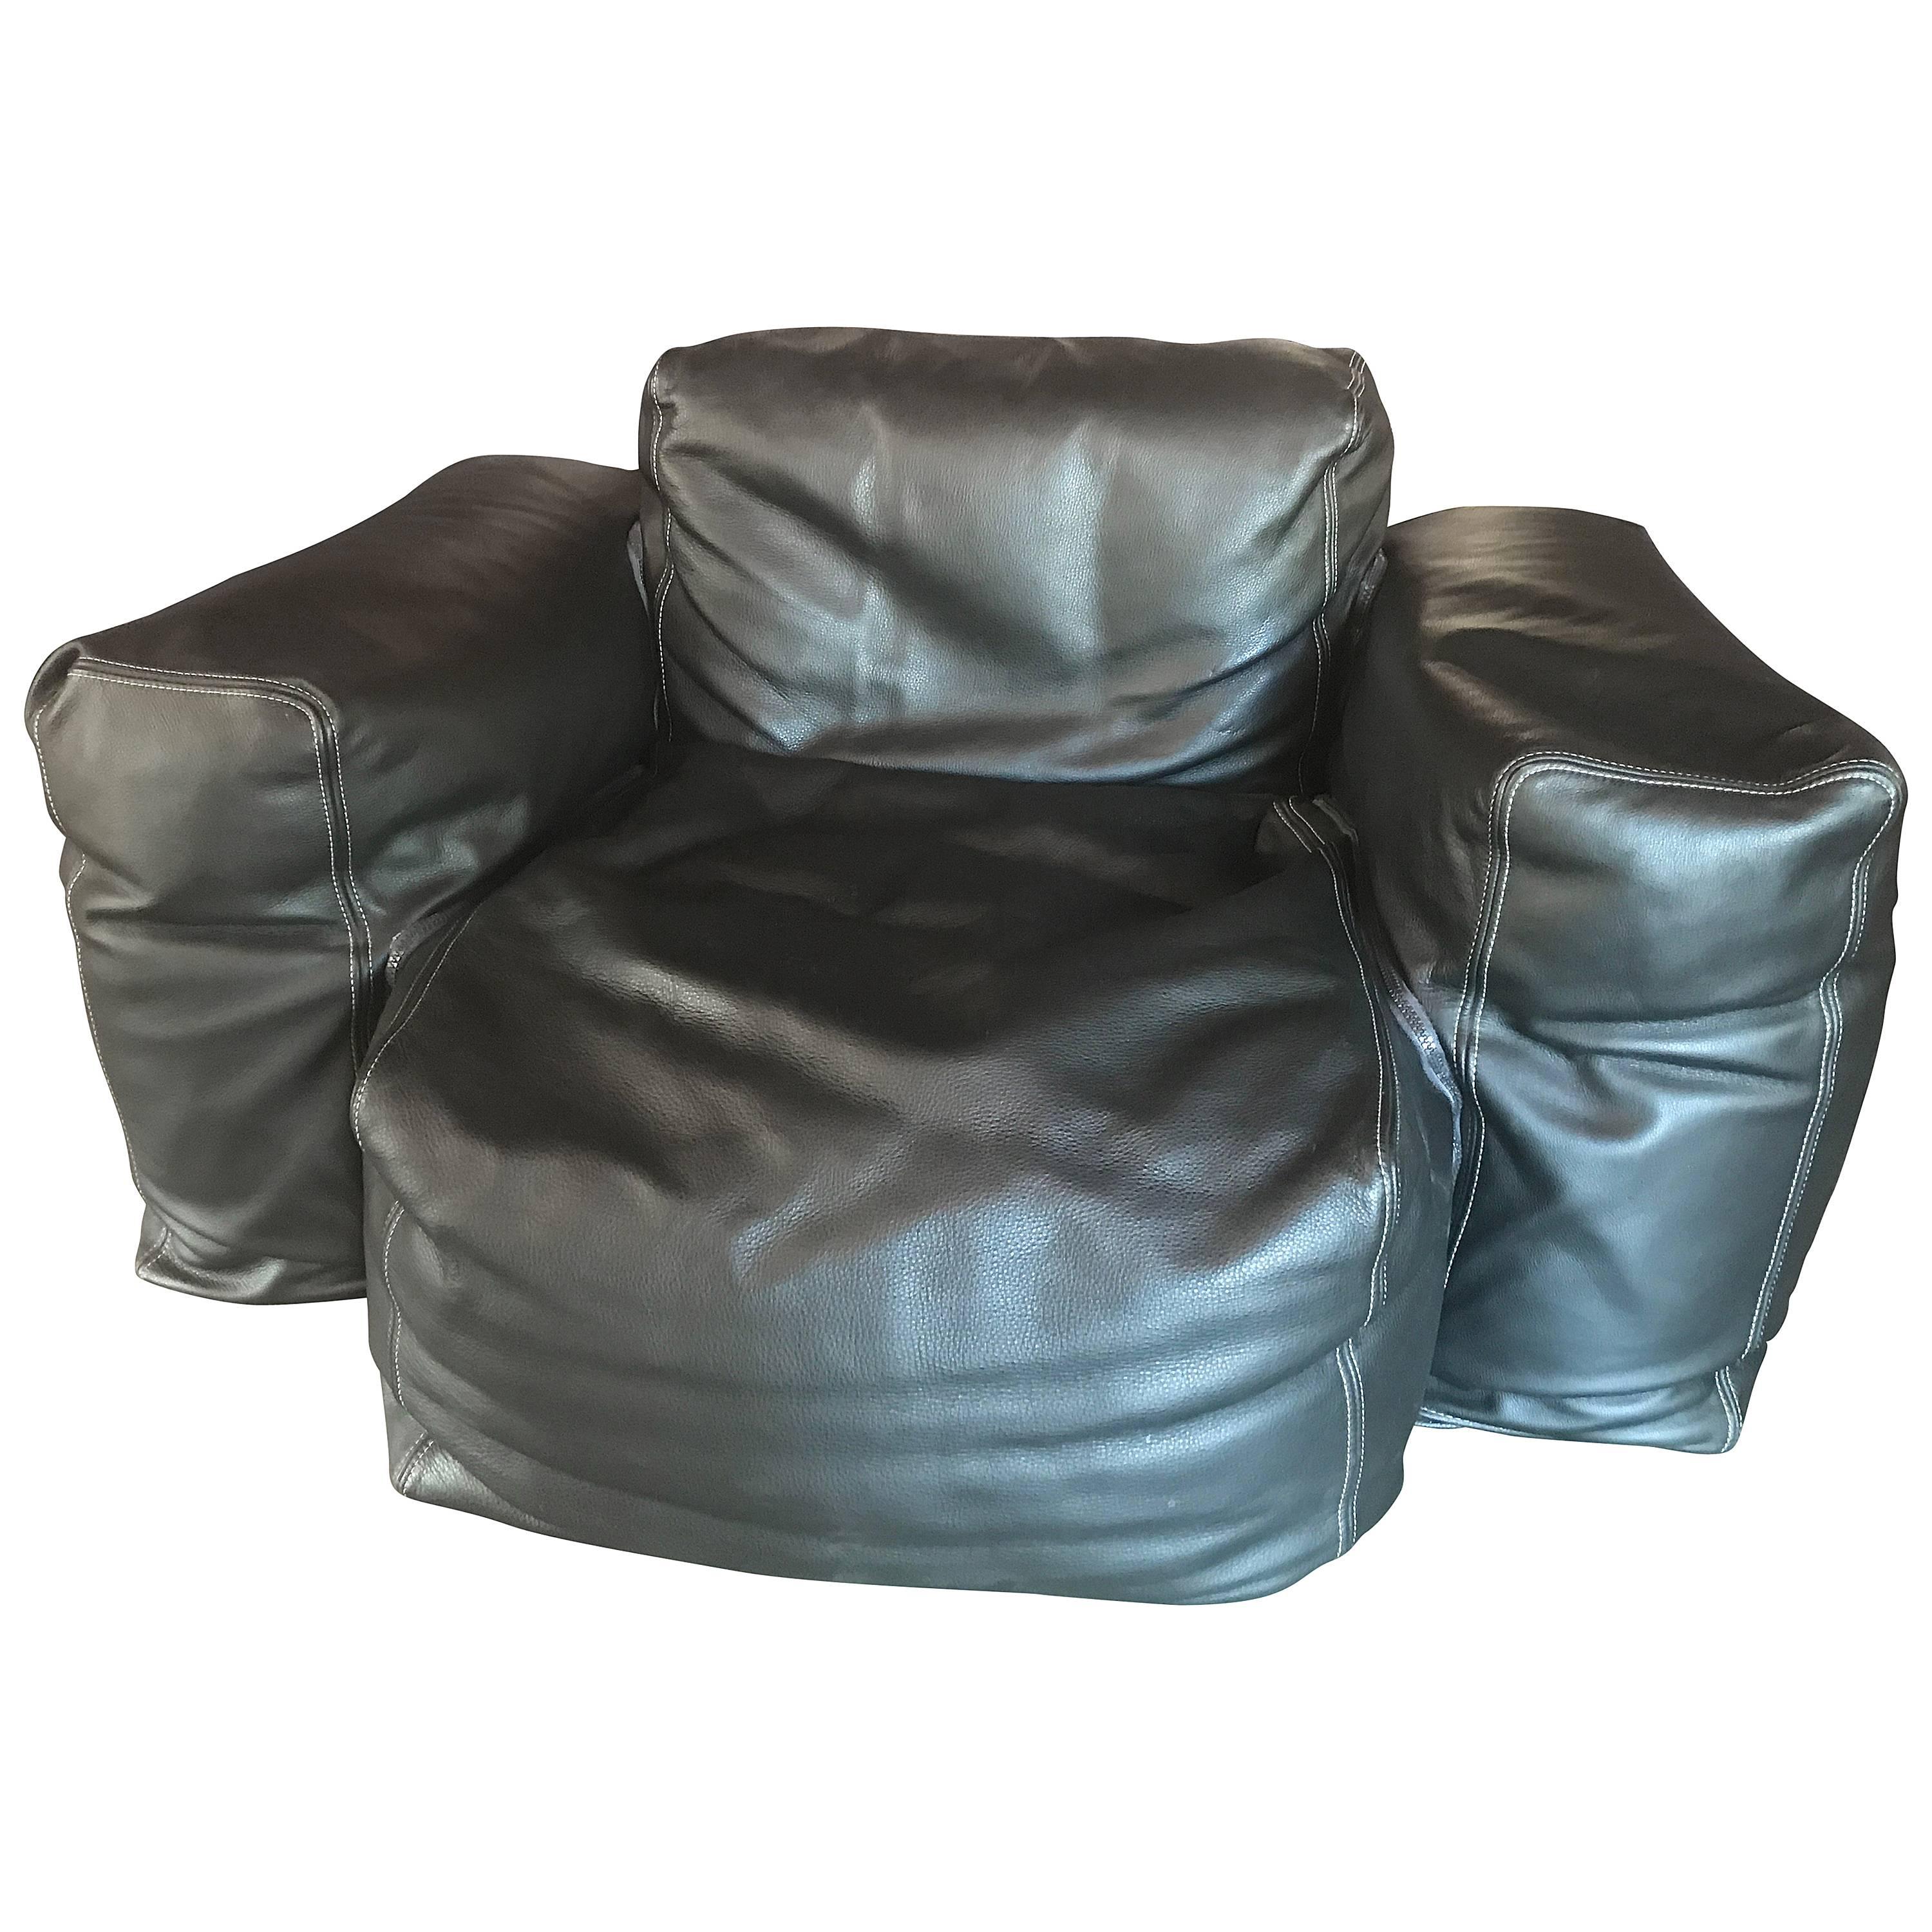 Jasper Morrison Cappellini "Superoblong" Leather Bean Bag Lounge Chair